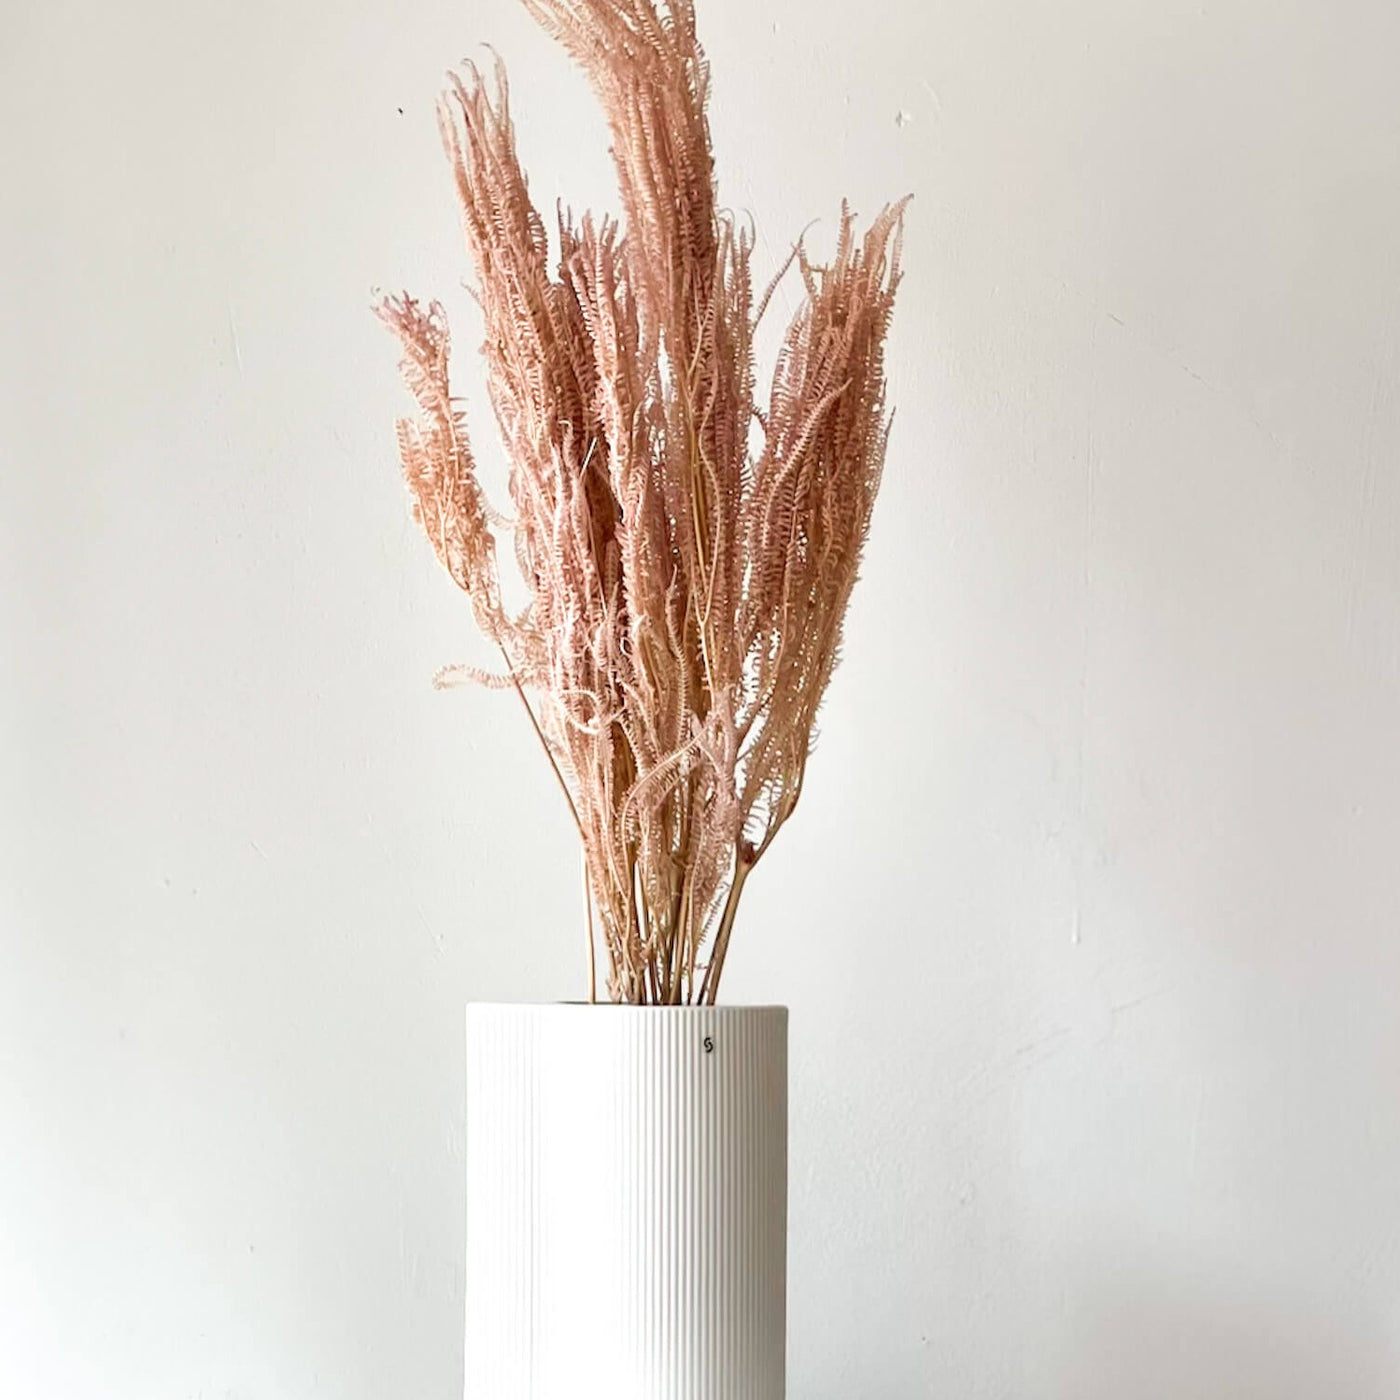 Konservierter Farn konserviert I 70 cm | weiss | rosa | pink - Größe: 6-7 Stiele - Farbe: rosa